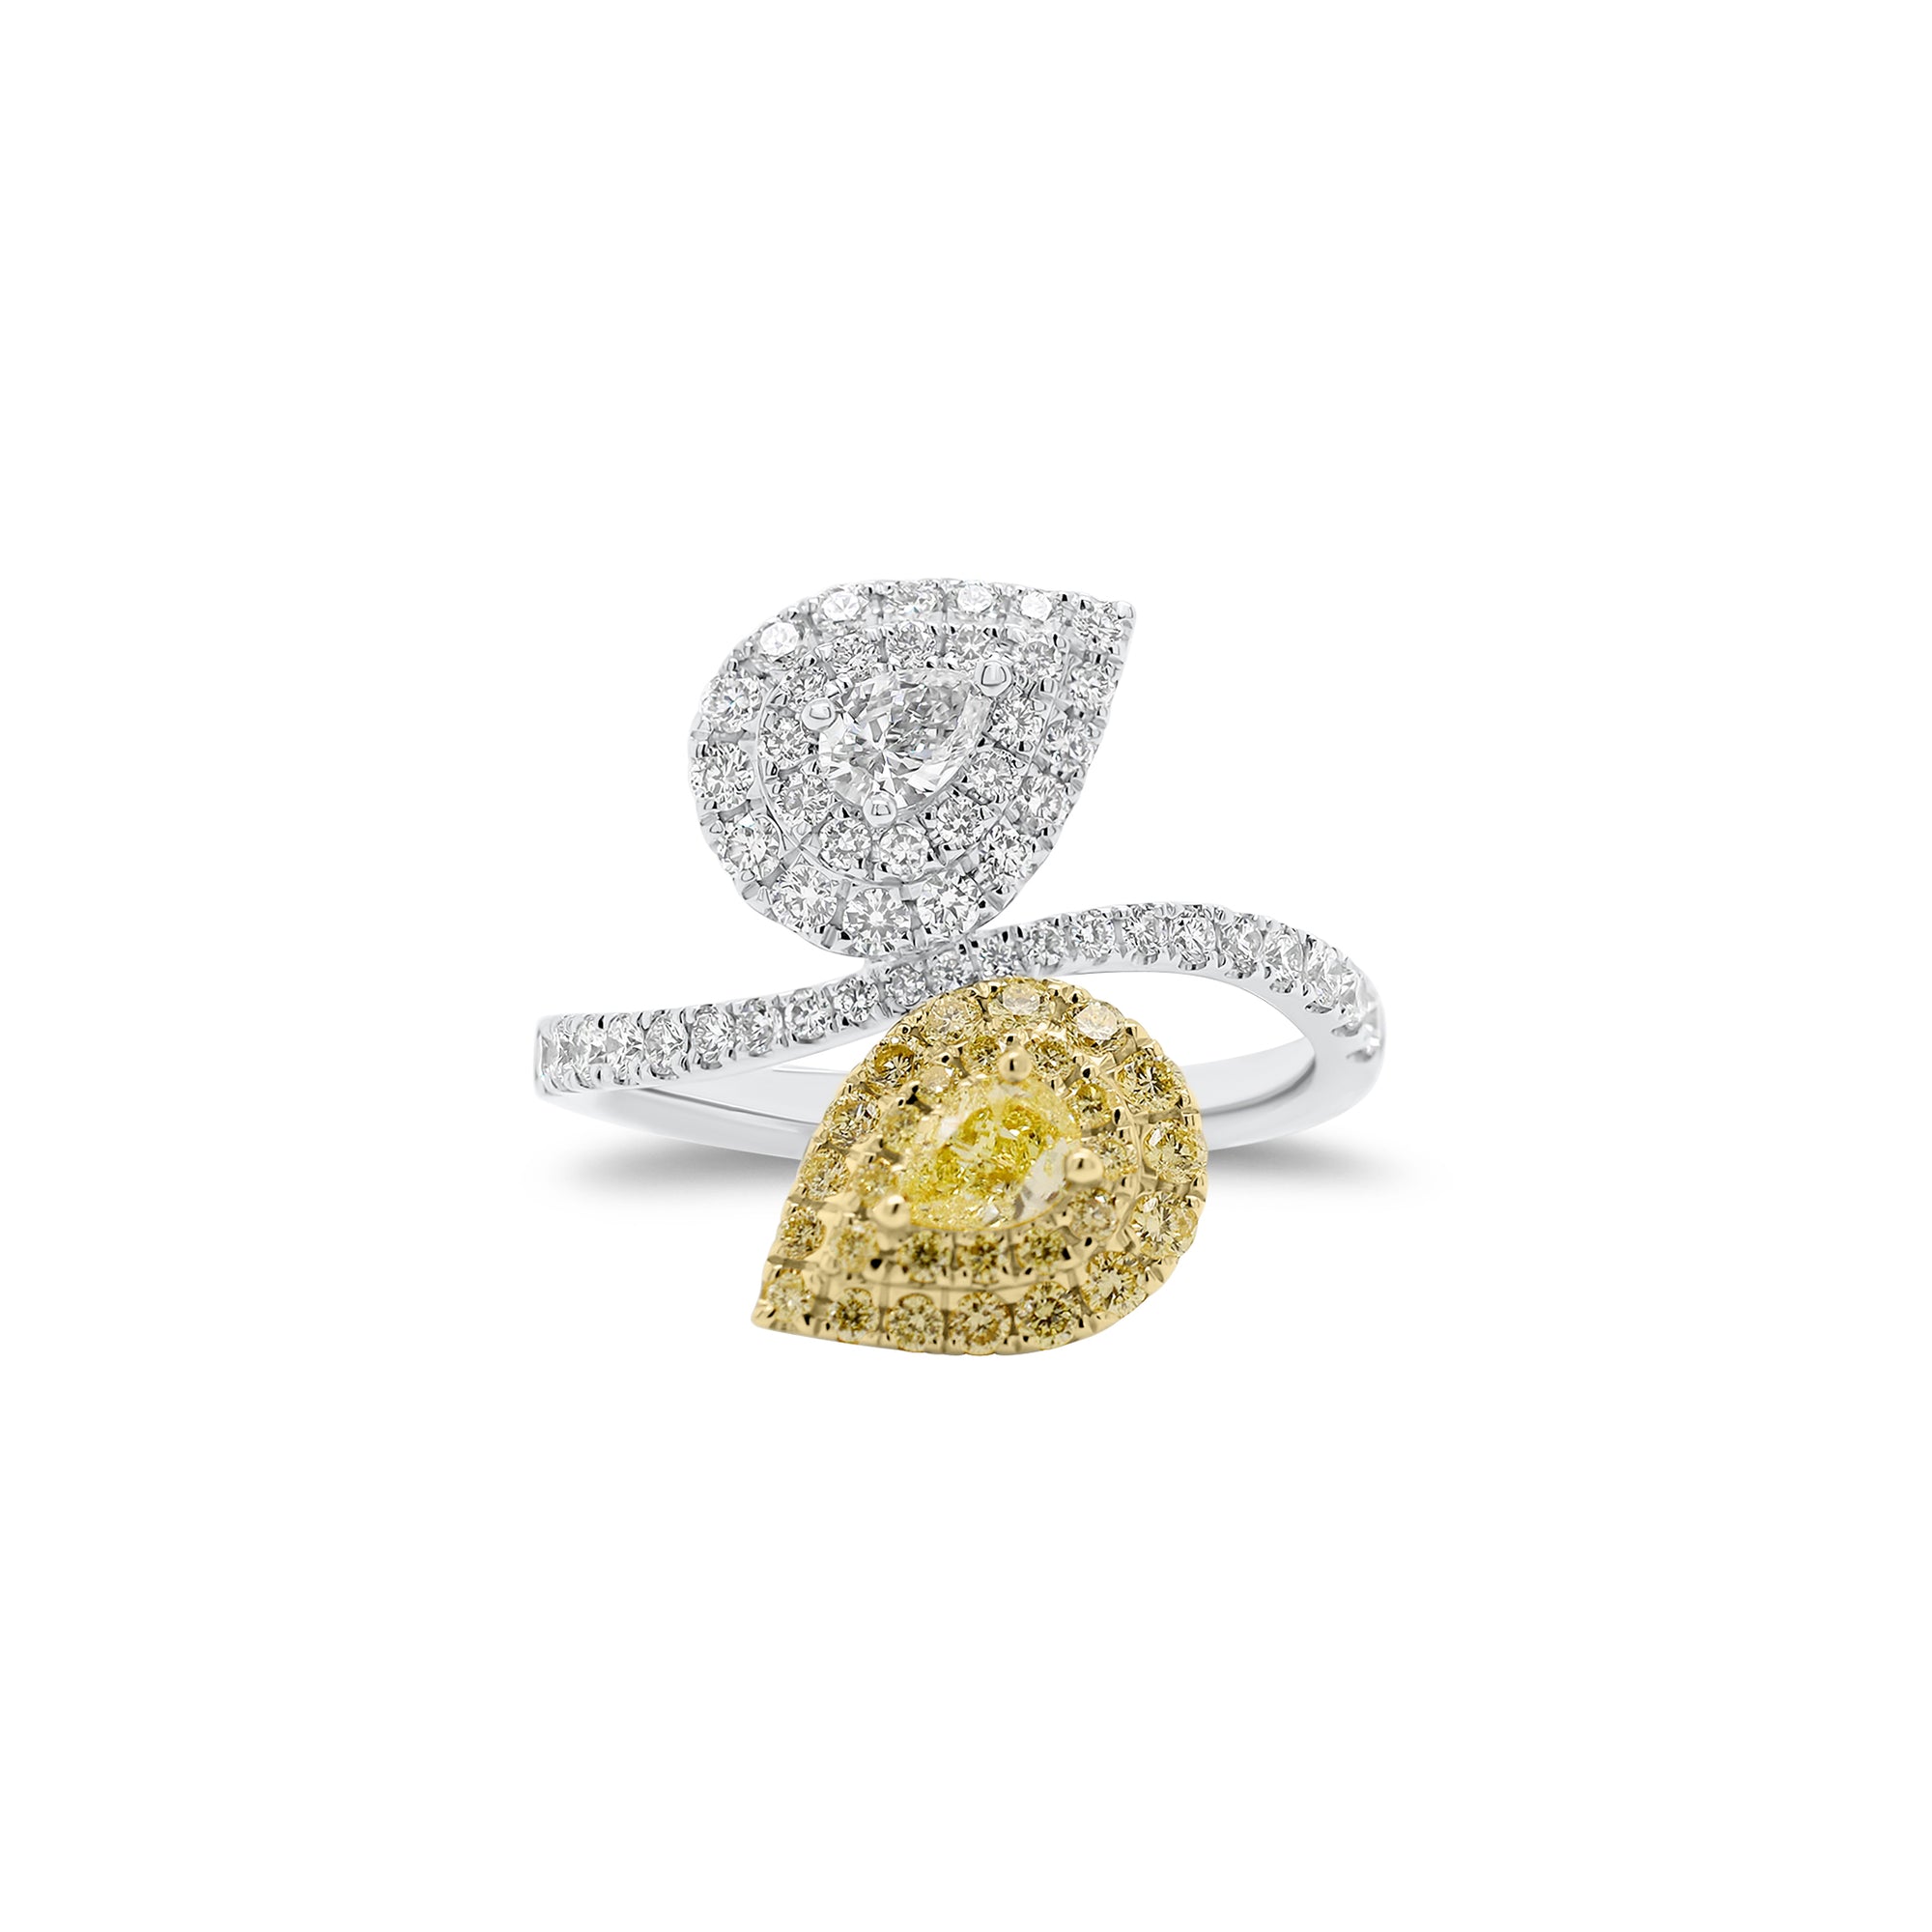 Yellow Diamond Toi et Moi Ring - 18K gold weighing 4.22 grams  - 0.22 ct Fancy yellow pear-shaped diamond  - 0.13 ct pear-shaped diamond  - 28 Fancy yellow round diamonds weighing 0.26 carats  - 49 round diamonds weighing 0.50 carats